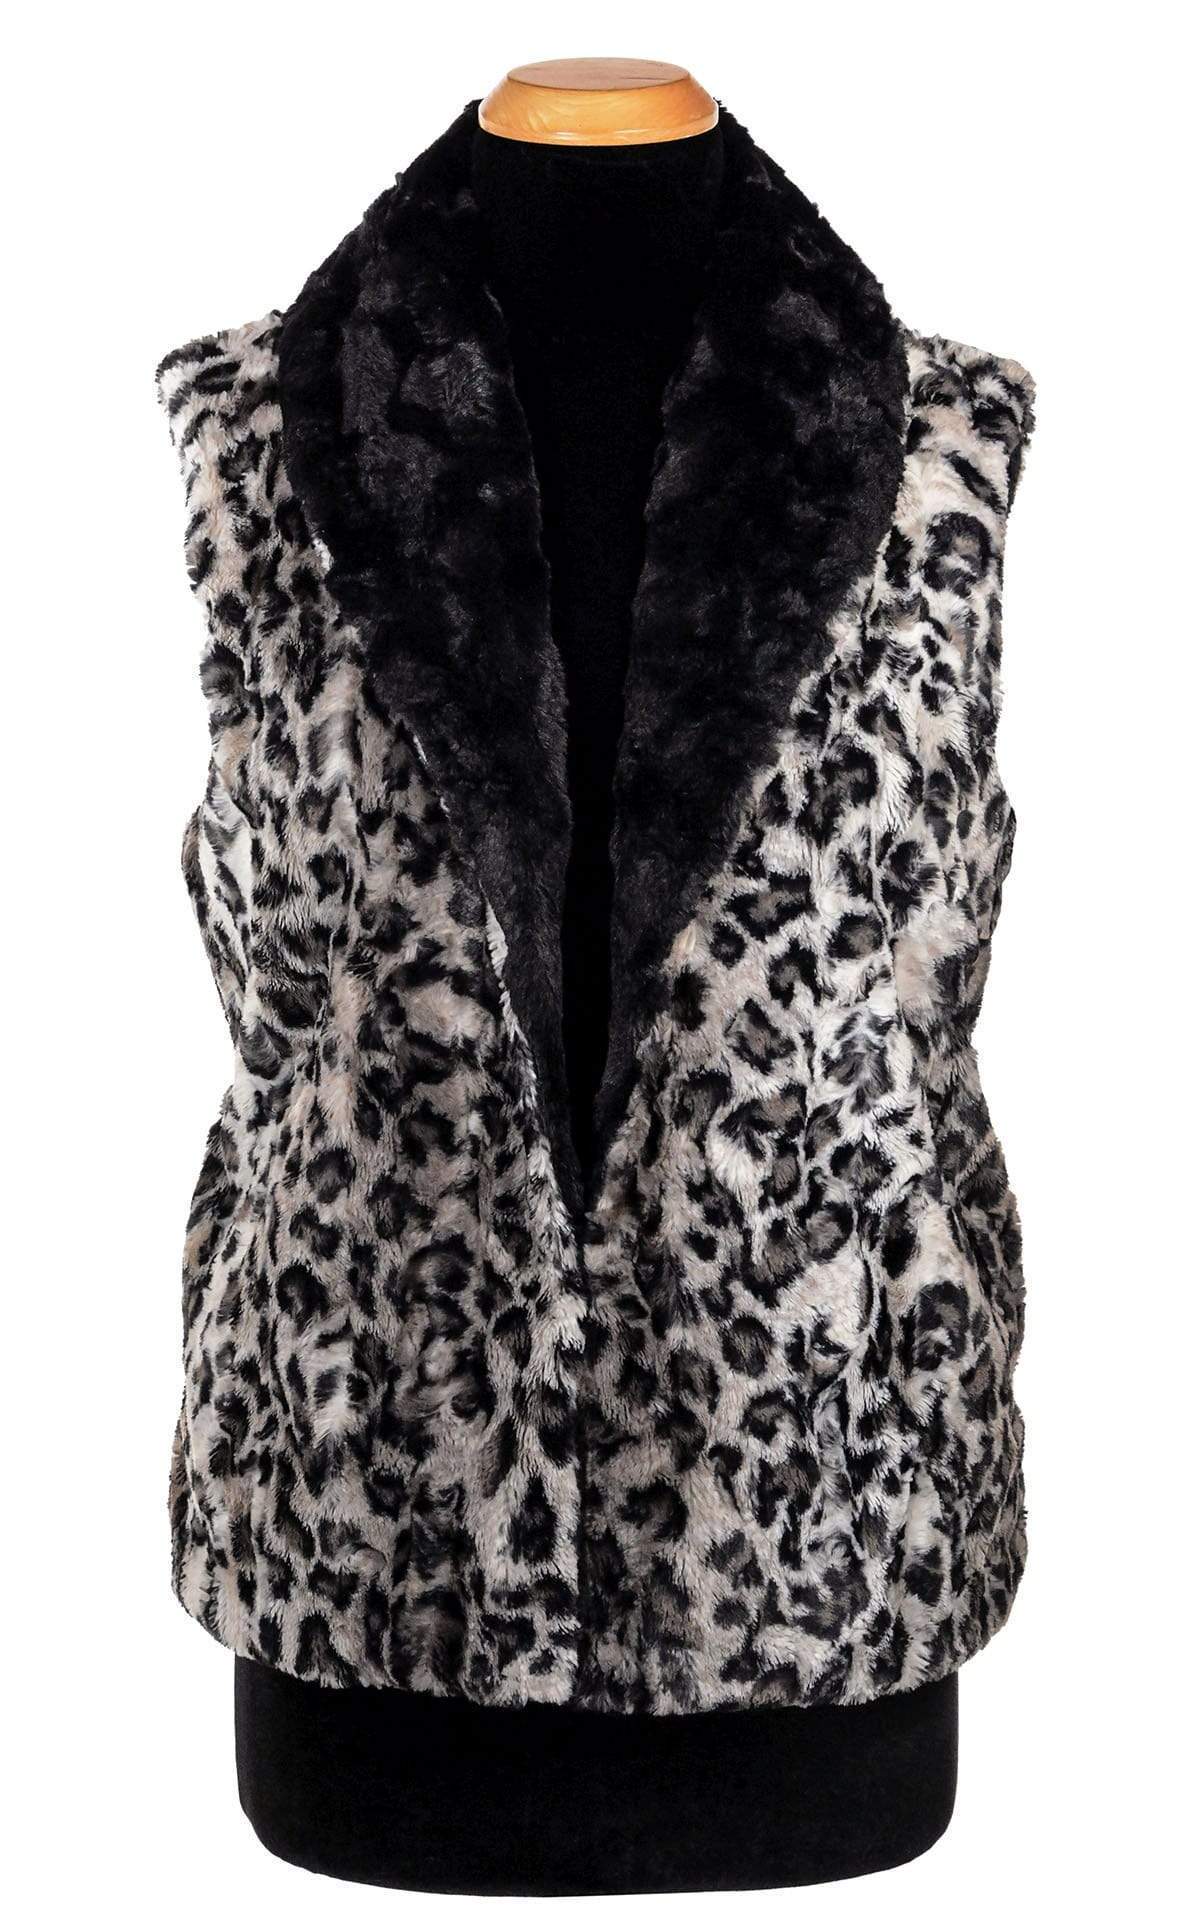 Shawl Collar Vest - Luxury Faux Fur Savannah Cat in Gray with Cuddly Fur in Black